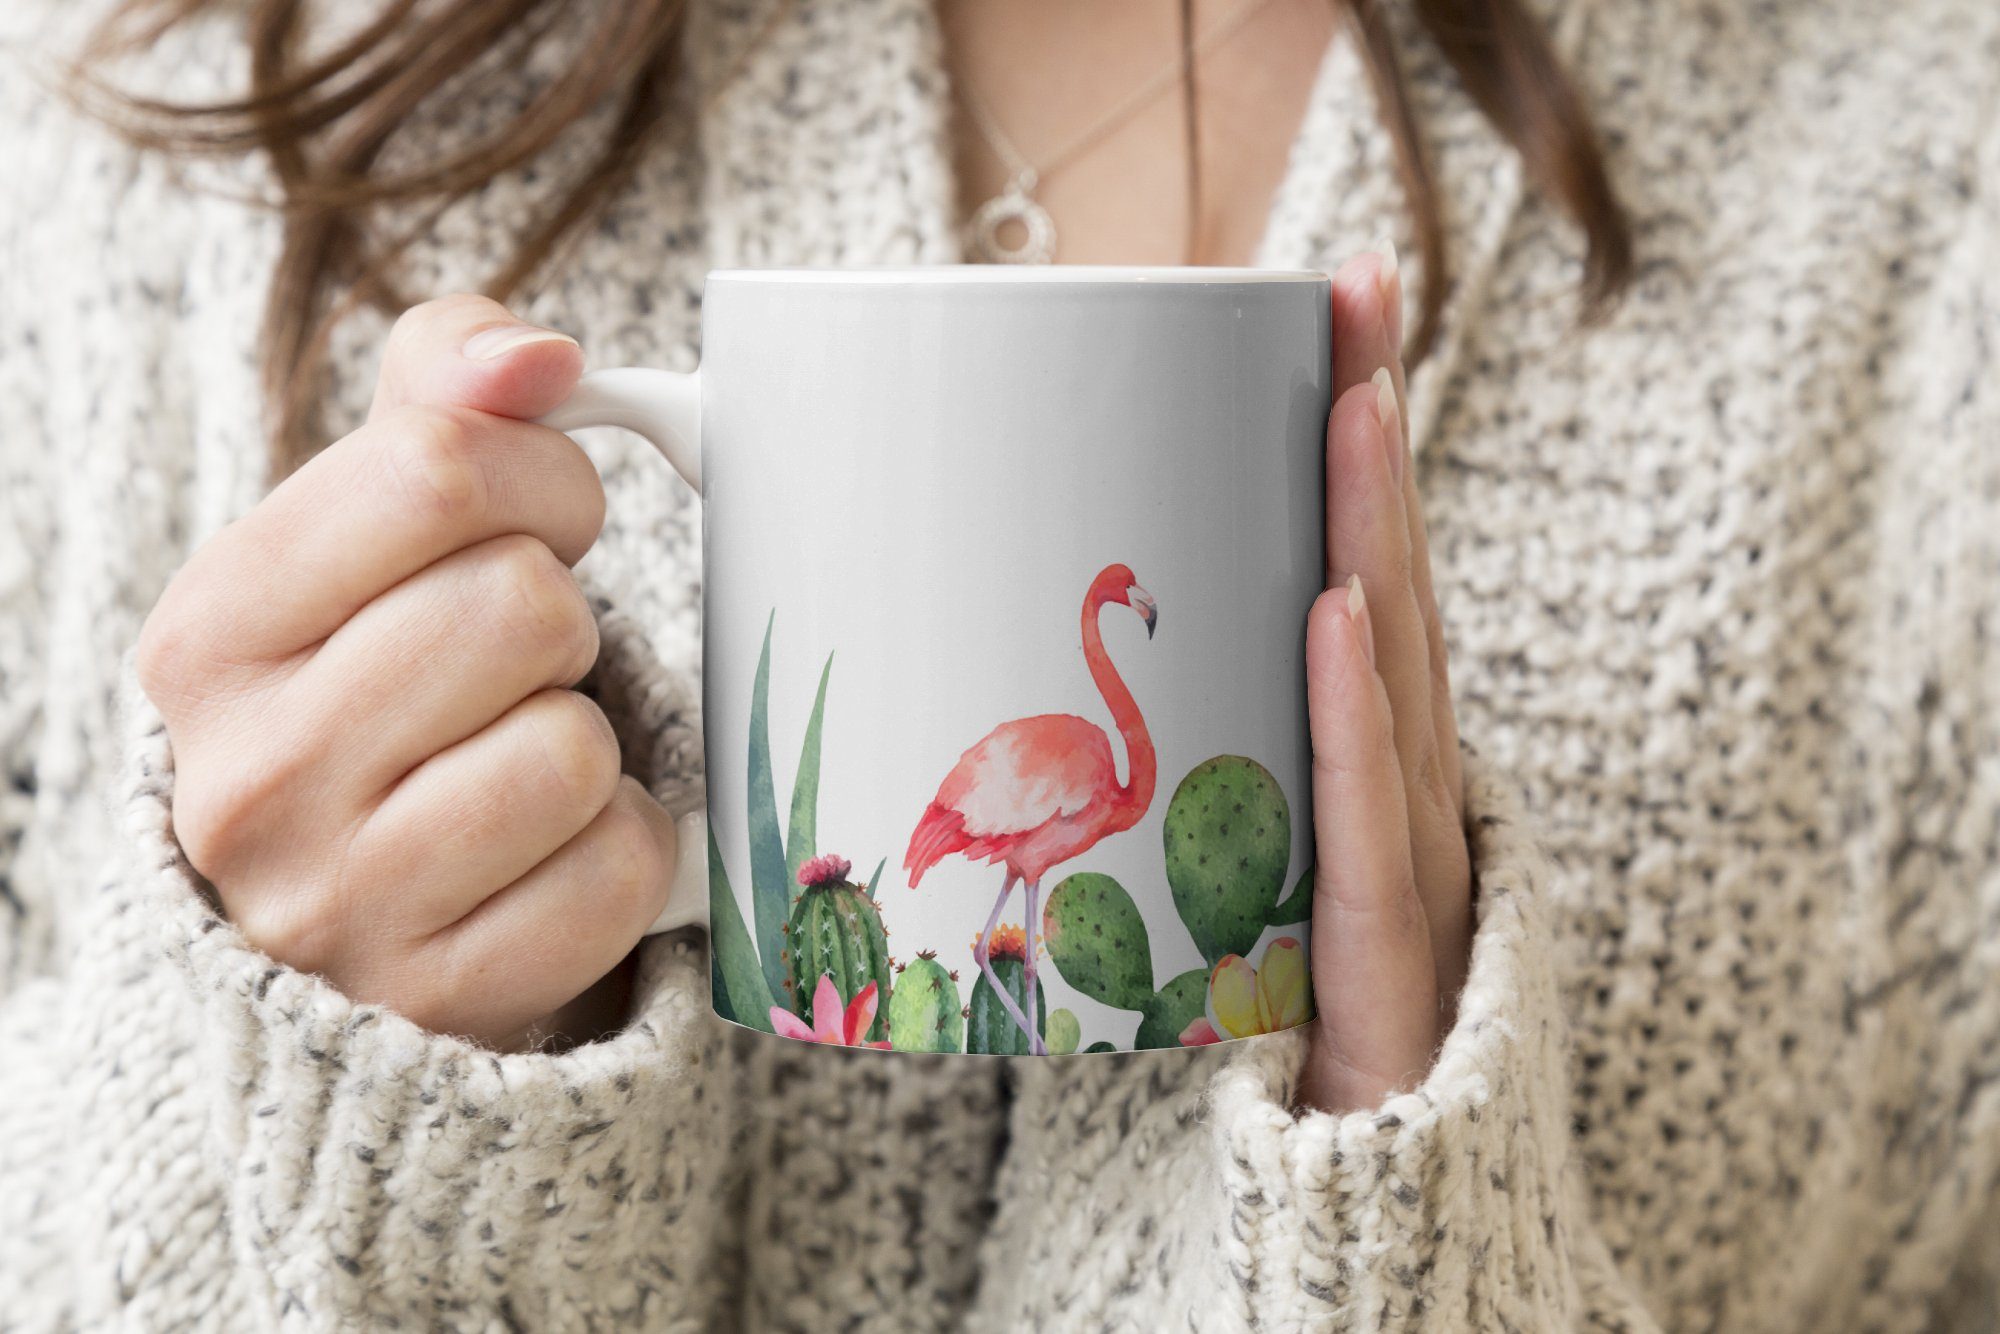 MuchoWow Tasse Mädchen - Teetasse, Aquarell Geschenk - Pflanzen Kind - Flamingo - Becher, Keramik, Kaffeetassen, Jungen, - Teetasse